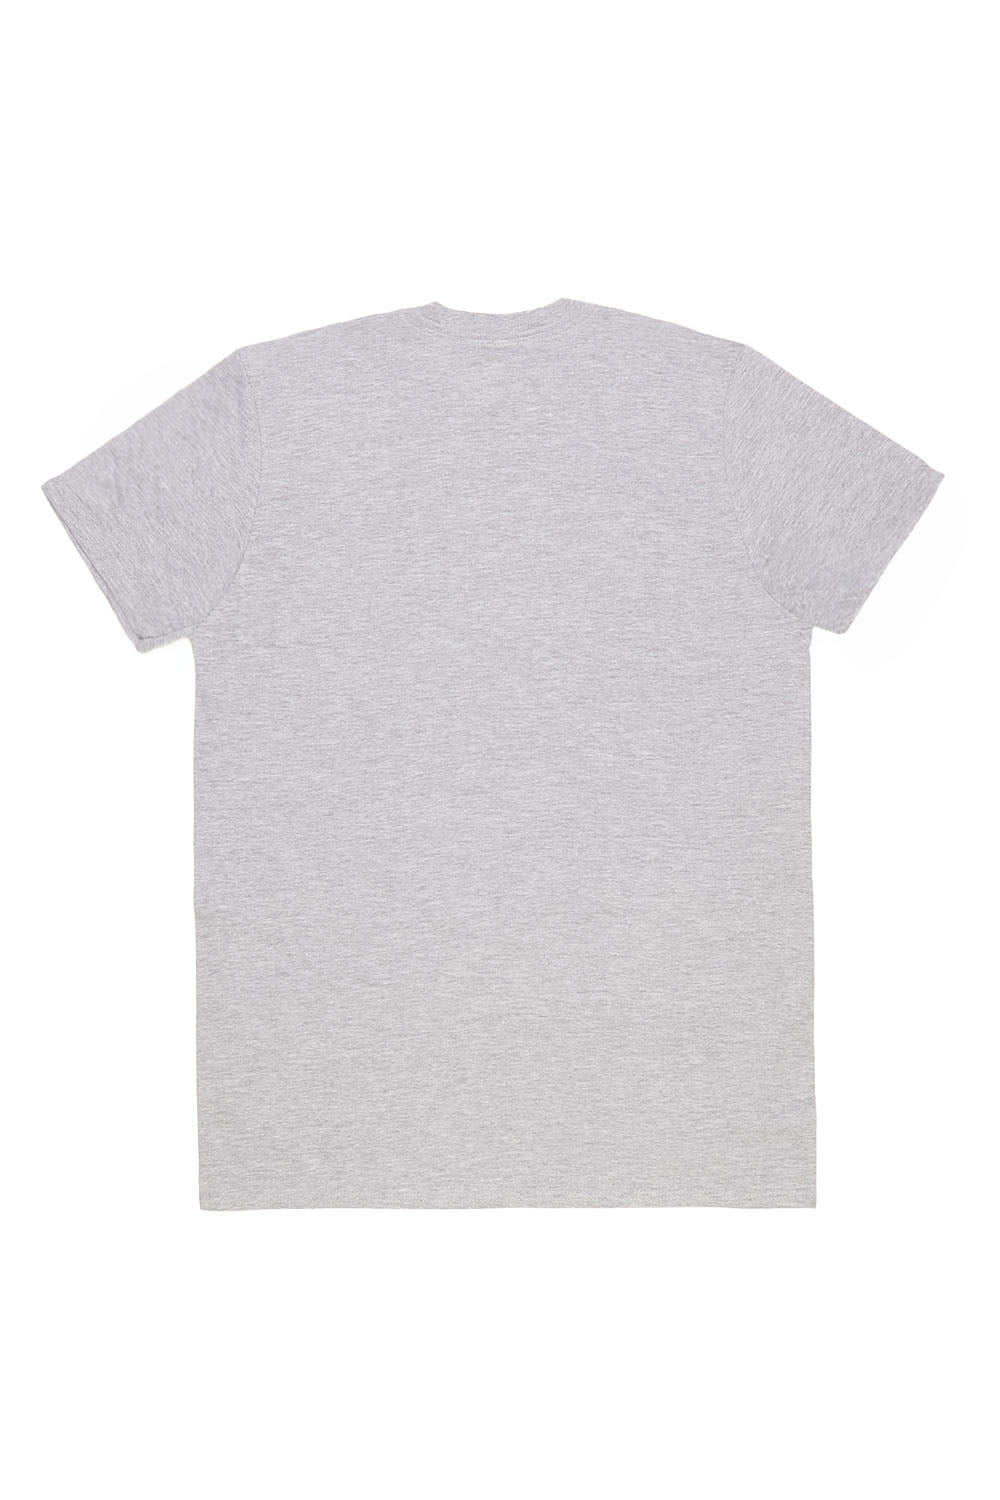 Santa Monica T-Shirt in Ash Grey (Custom Packs)